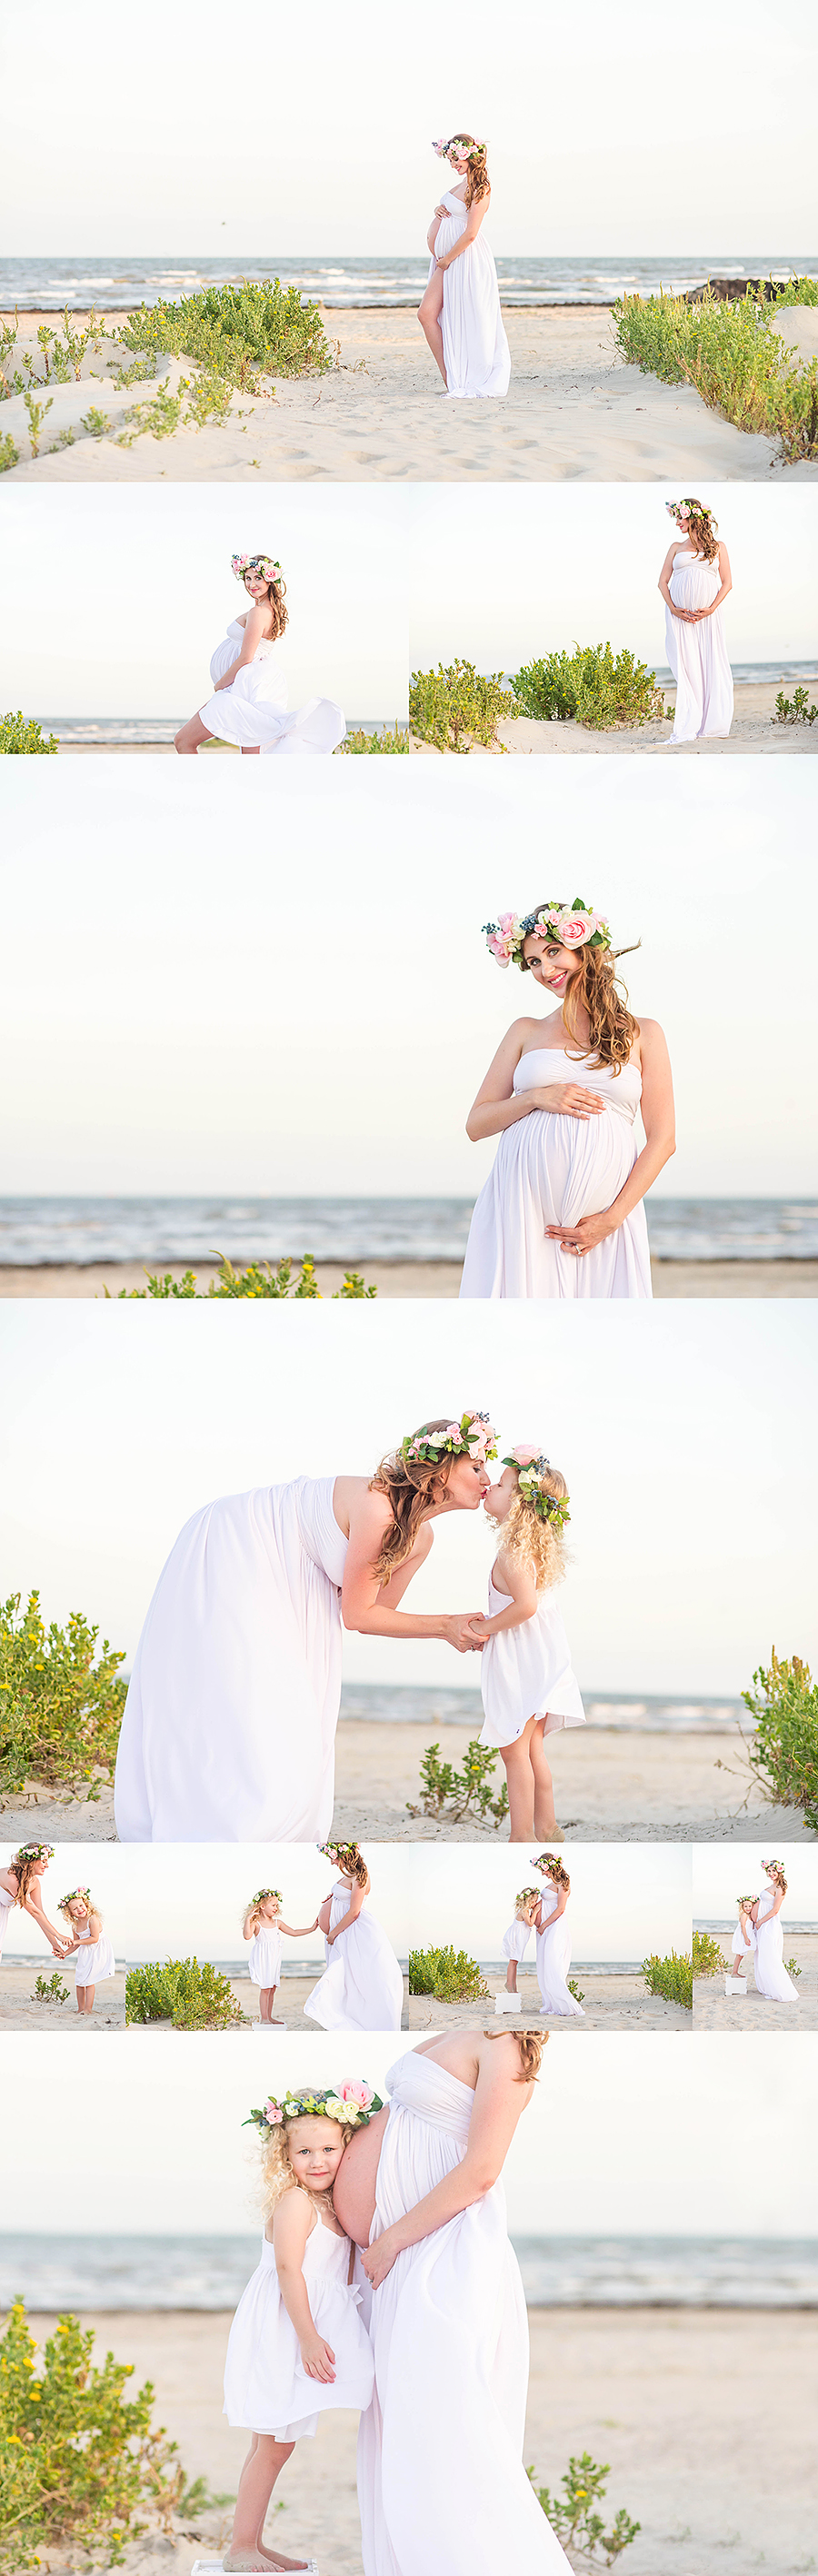 Houston Pregnancy Beach Photography